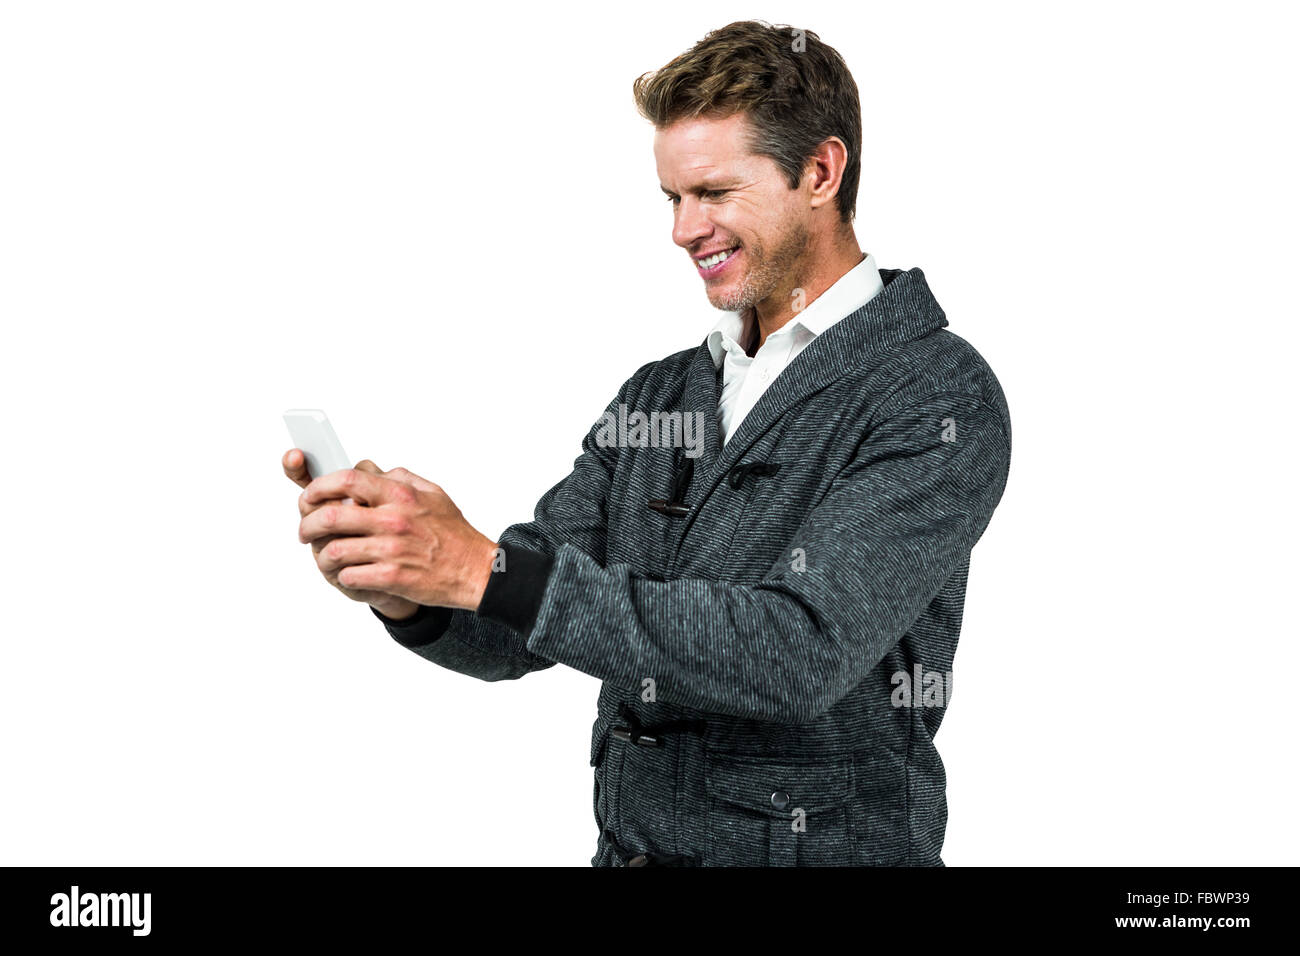 Happy man using mobile phone Stock Photo